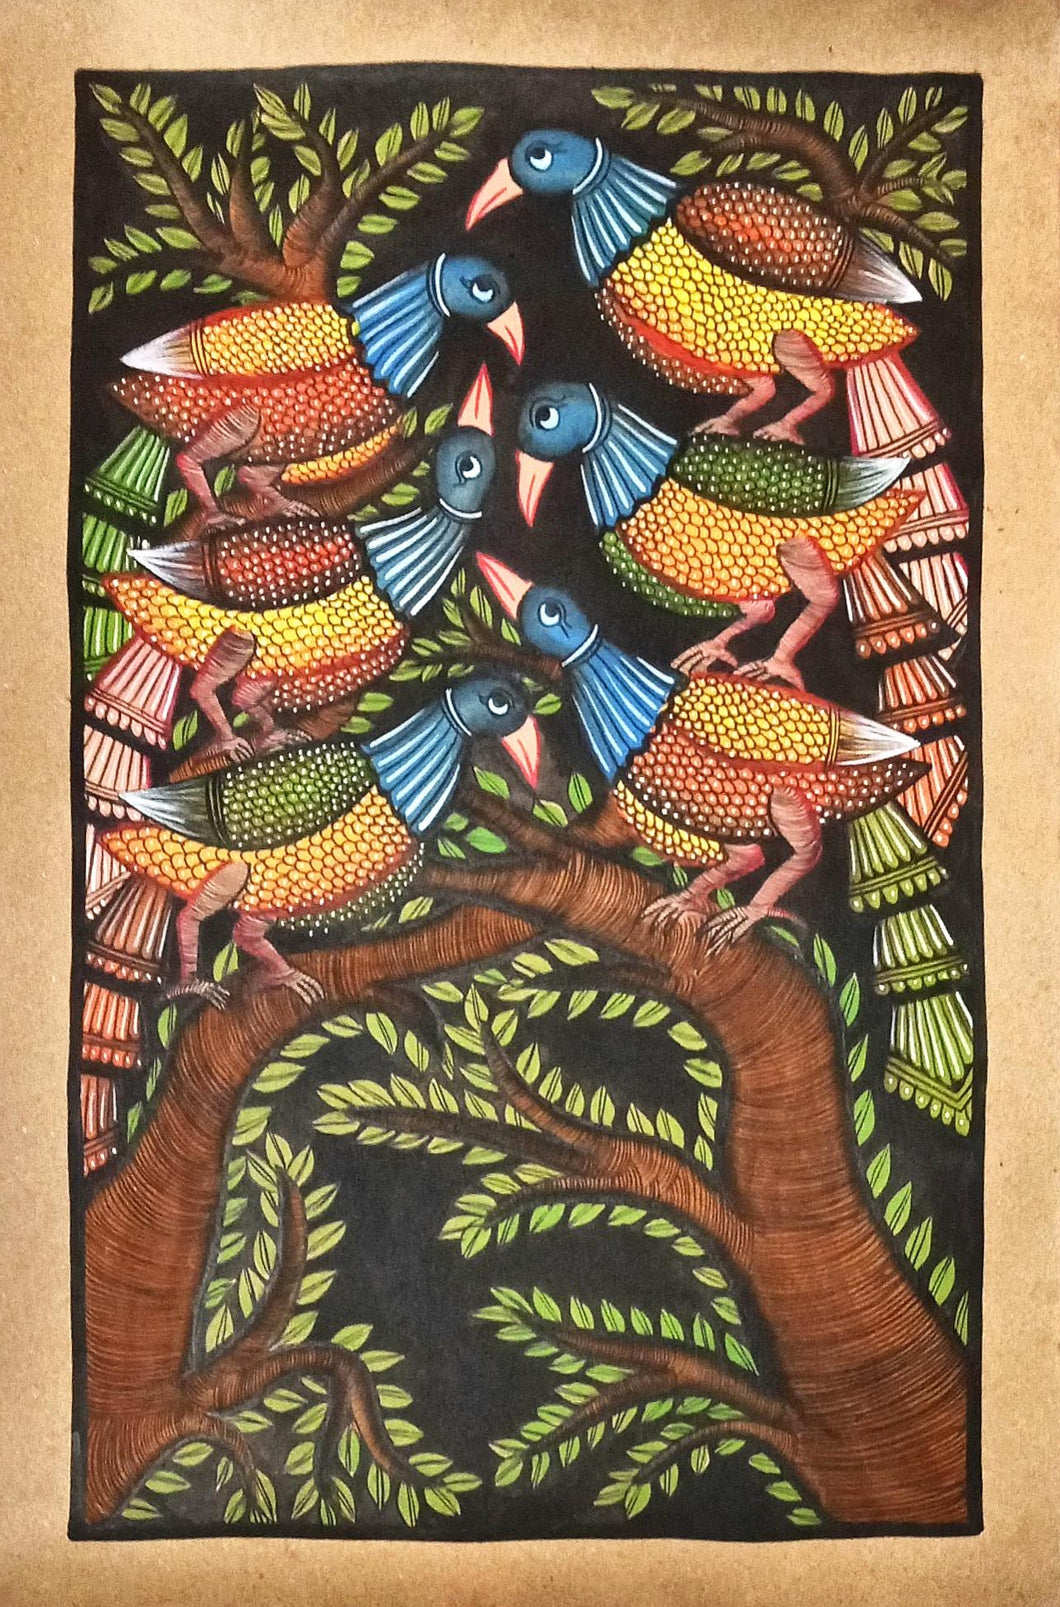 Birds of the Night -2 : Midnapore patachitra painting by Layala Chitrakar